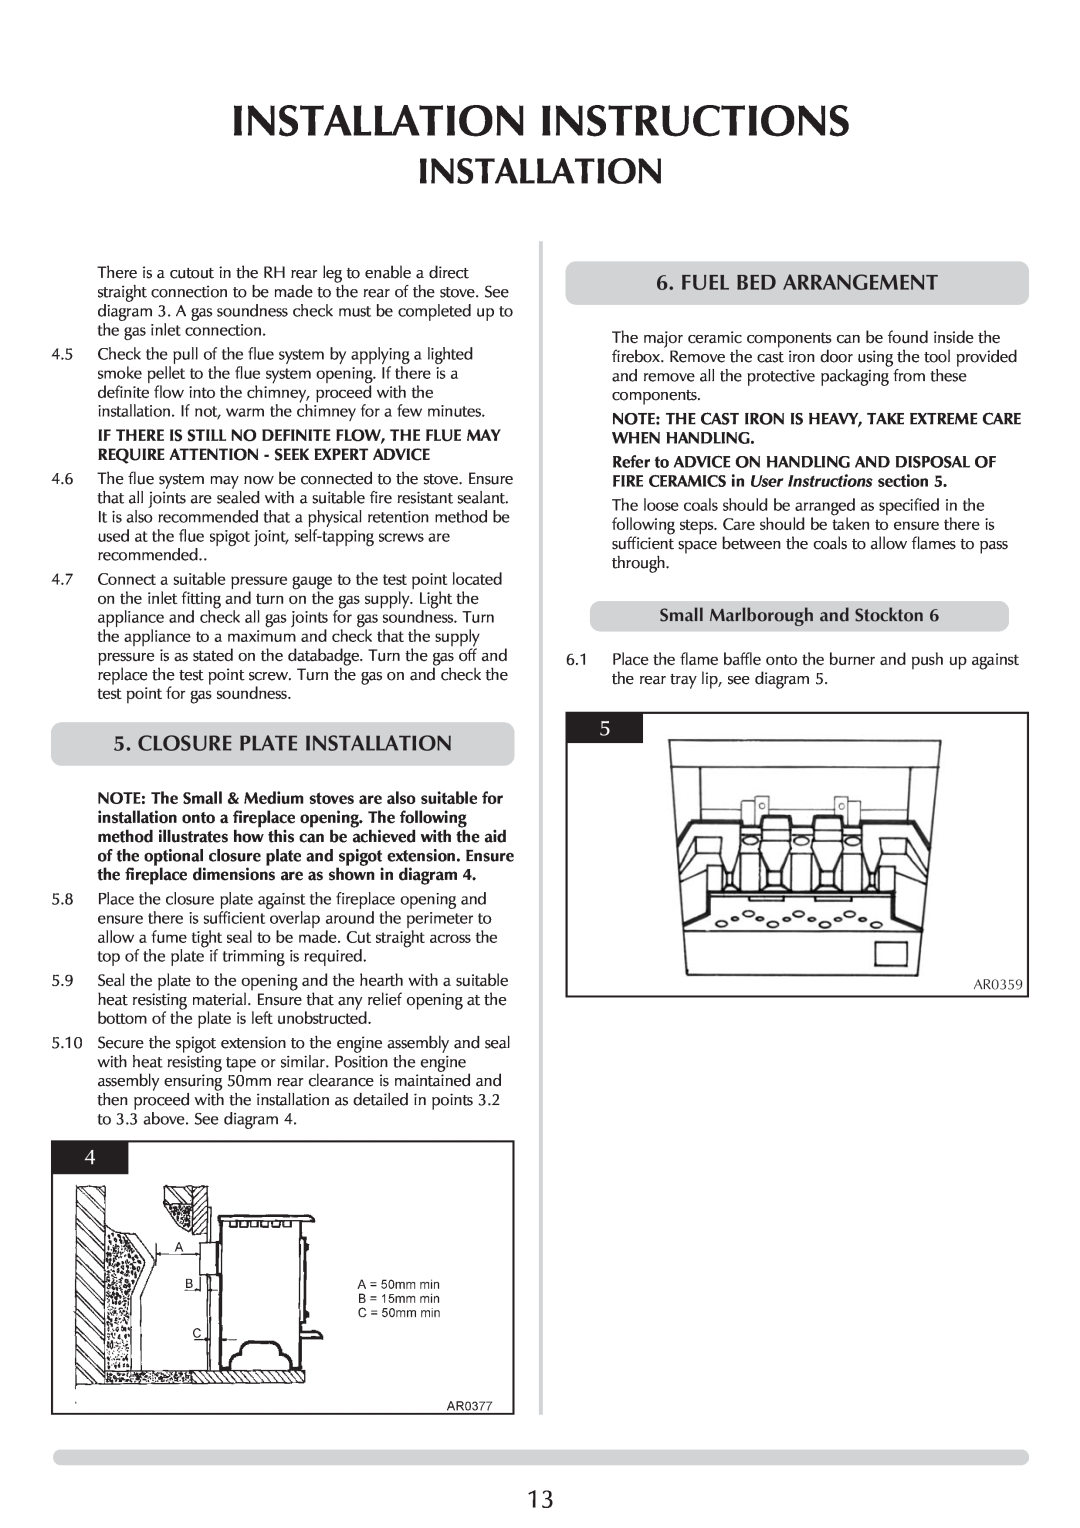 Stovax P8574 Installation Instructions, Closure Plate Installation, Fuel Bed Arrangement, Small Marlborough and Stockton 